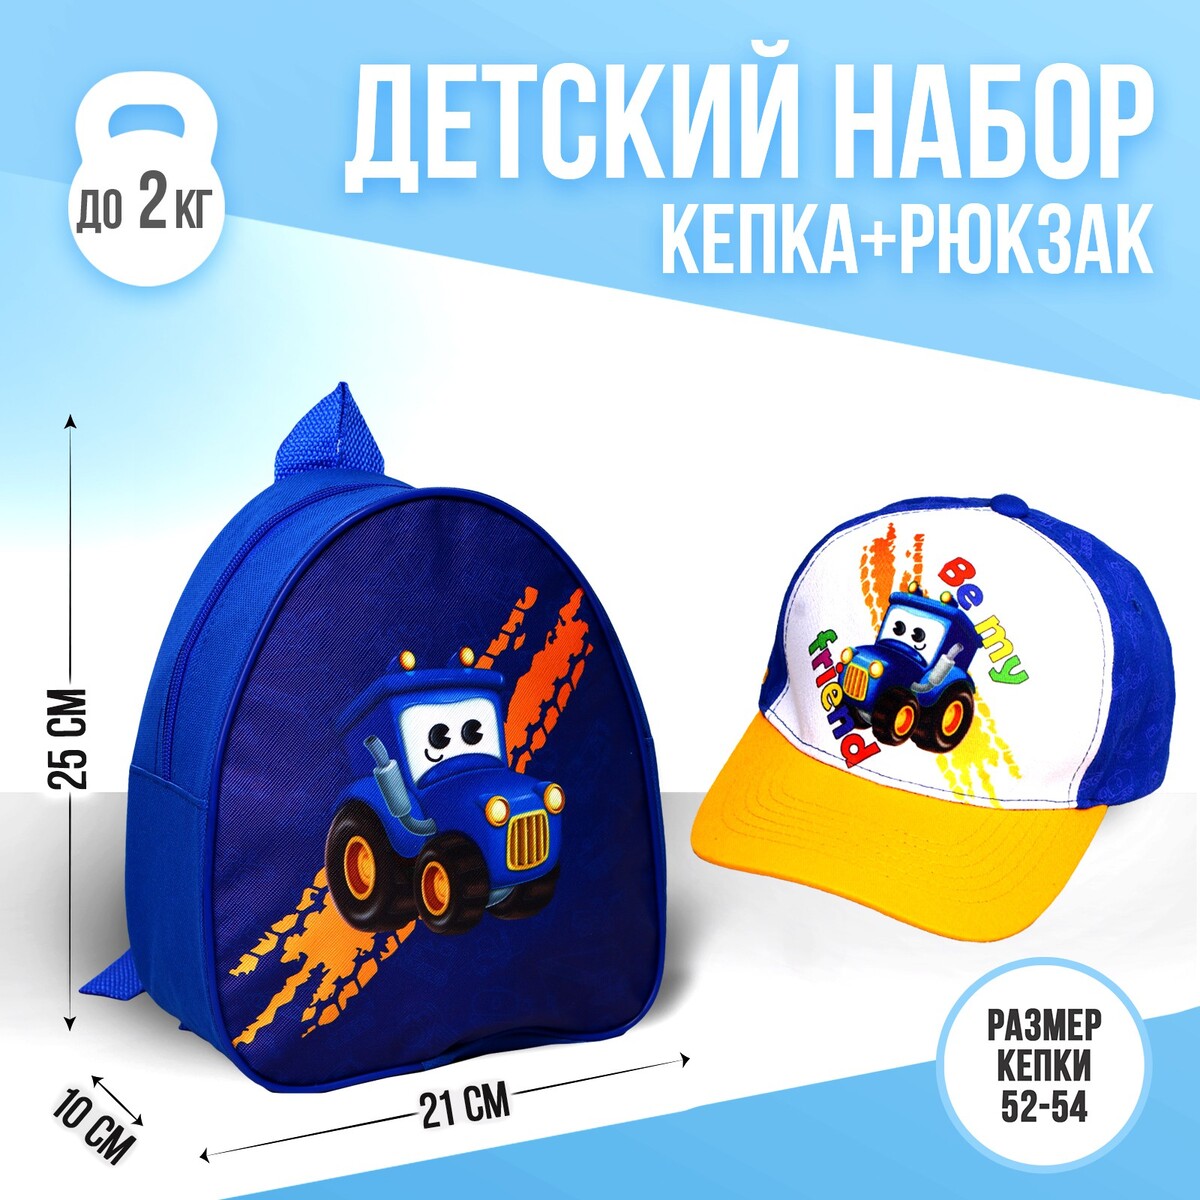 Детский набор be my friend, рюкзак, кепка рюкзак в походном стиле из коллекции kamchatka детский